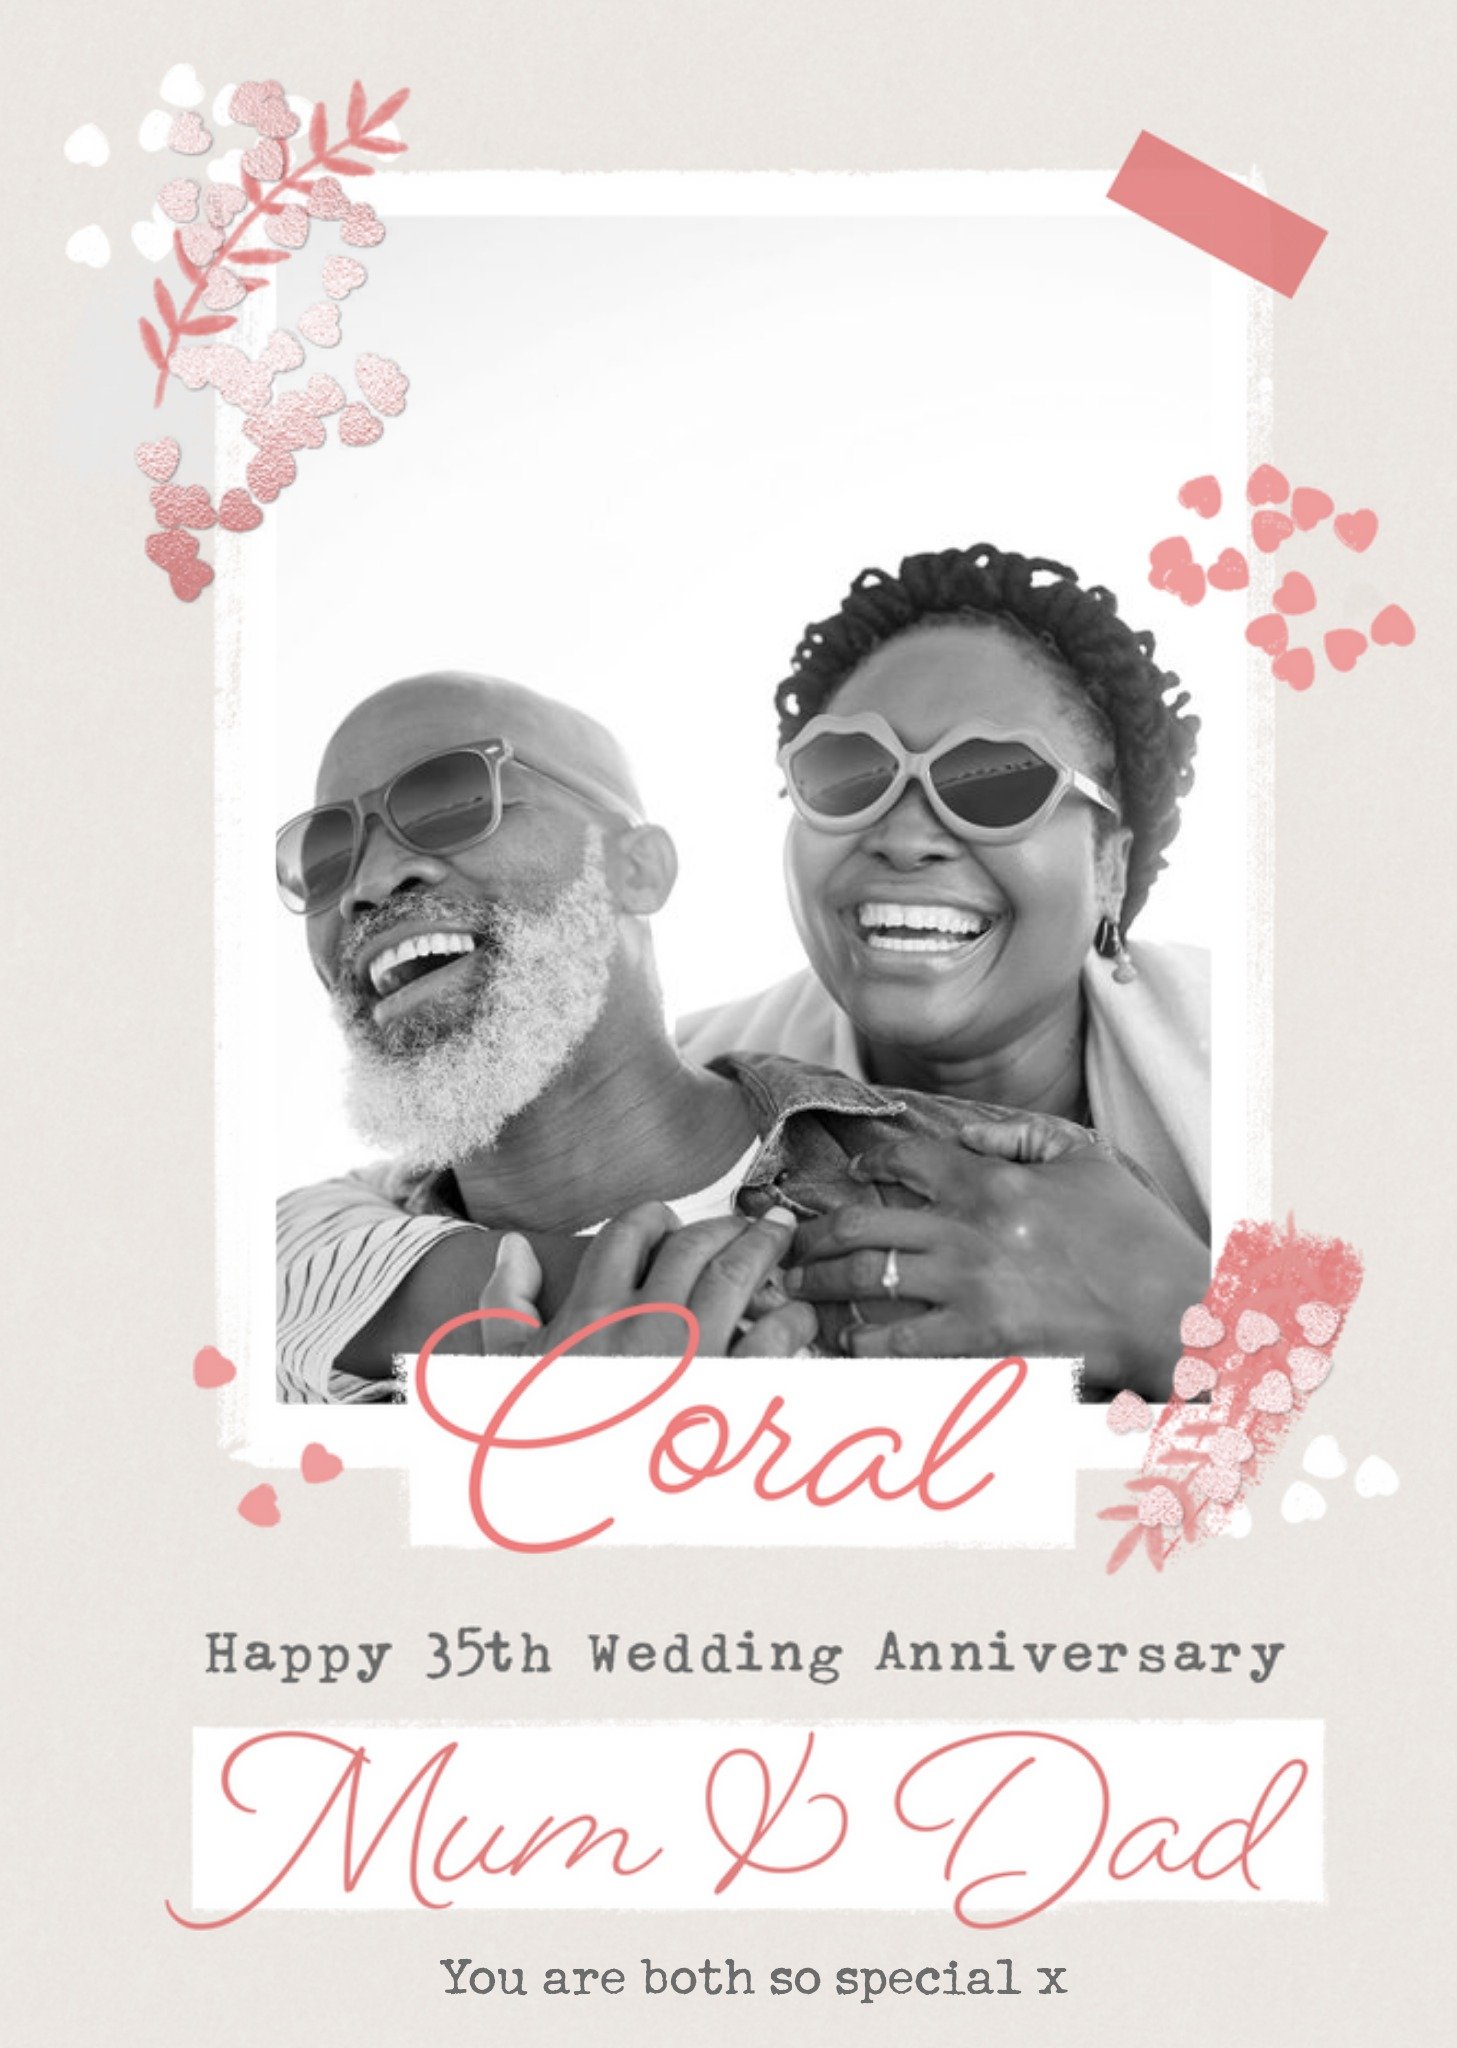 Moonpig Coral Happy 35th Wedding Anniversary Mum & Dad - Photo Upload, Large Card